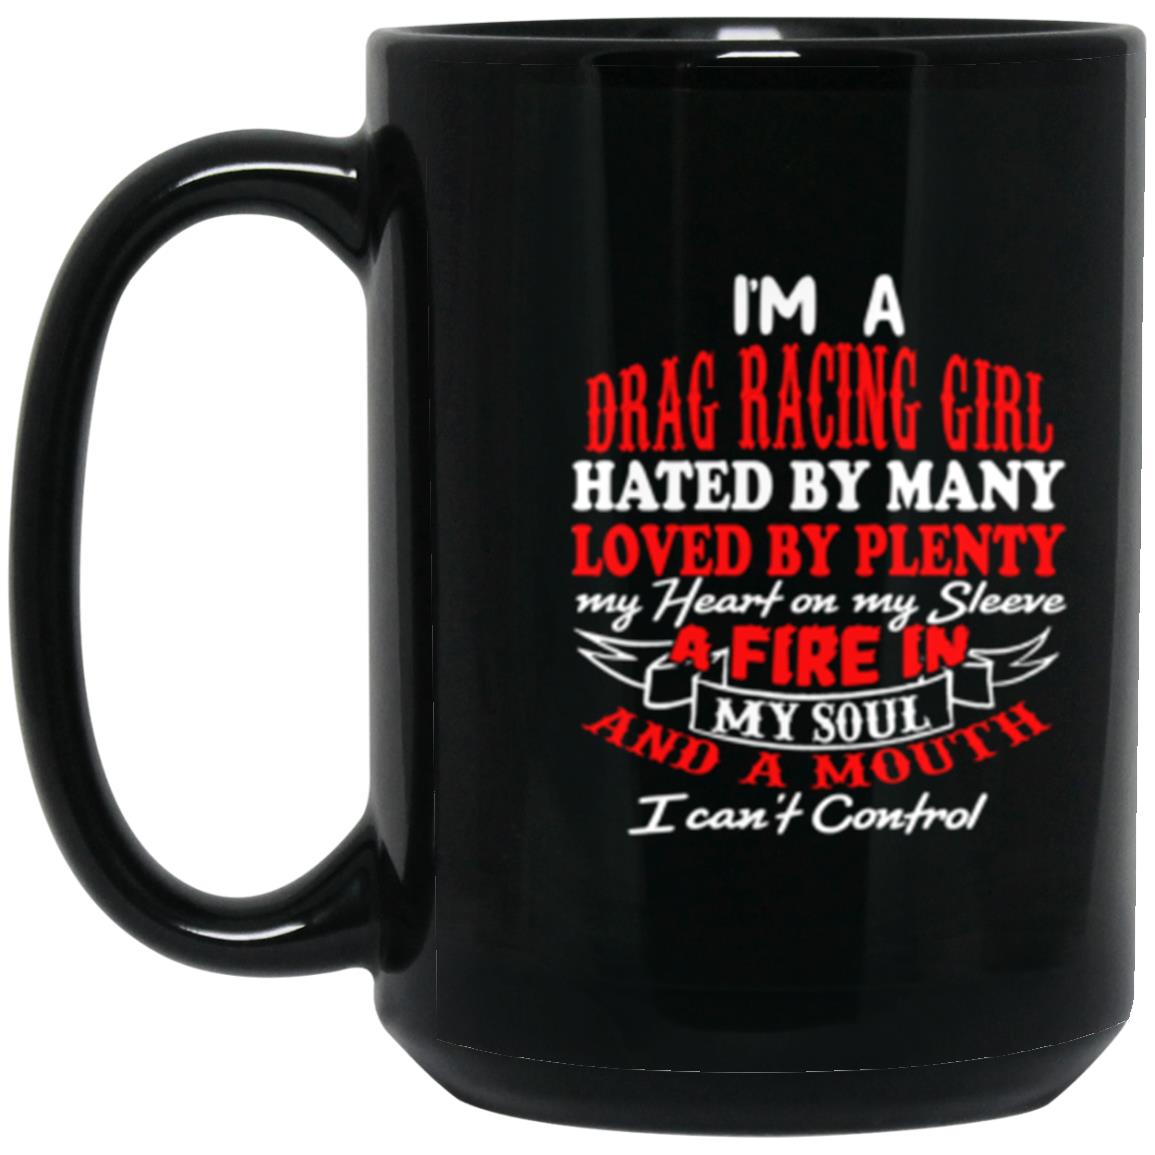 I'm A Drag Racing Girl Hated By Many Loved By Plenty 15 oz. Black Mug